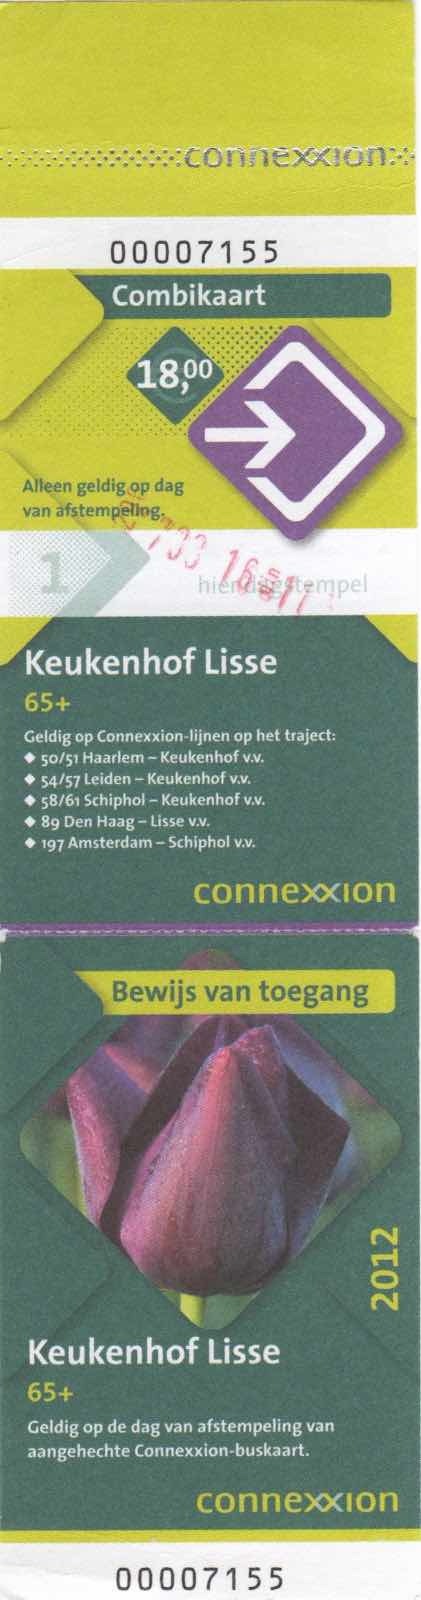 ticket for Connexxion bus and entrance to Keukenhof (2012)